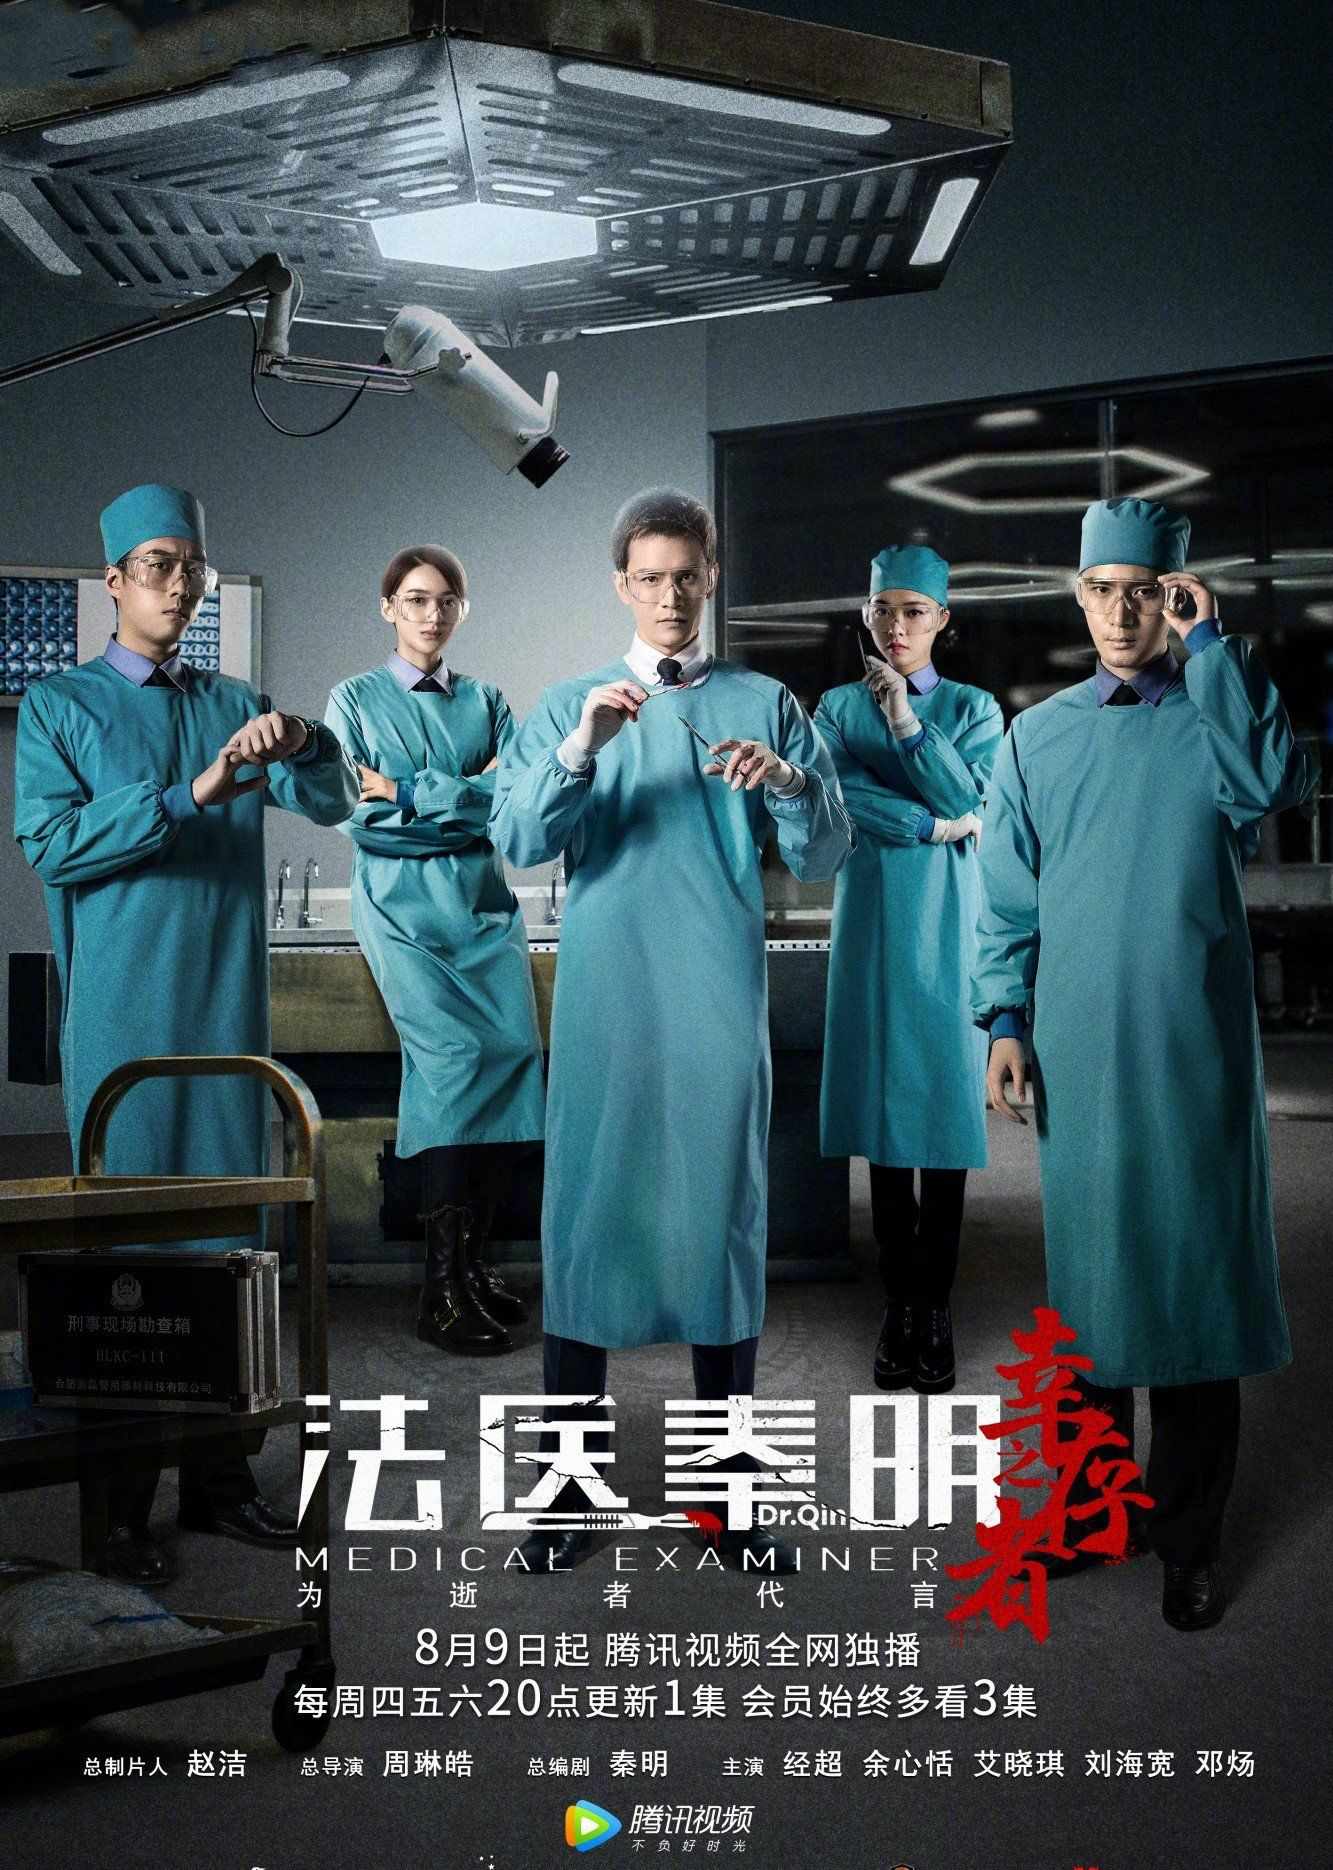 Xem Phim Pháp Y Tần Minh 3: Người Sống Sót (Medical Examiner Dr. Qin 3: The Survivor)